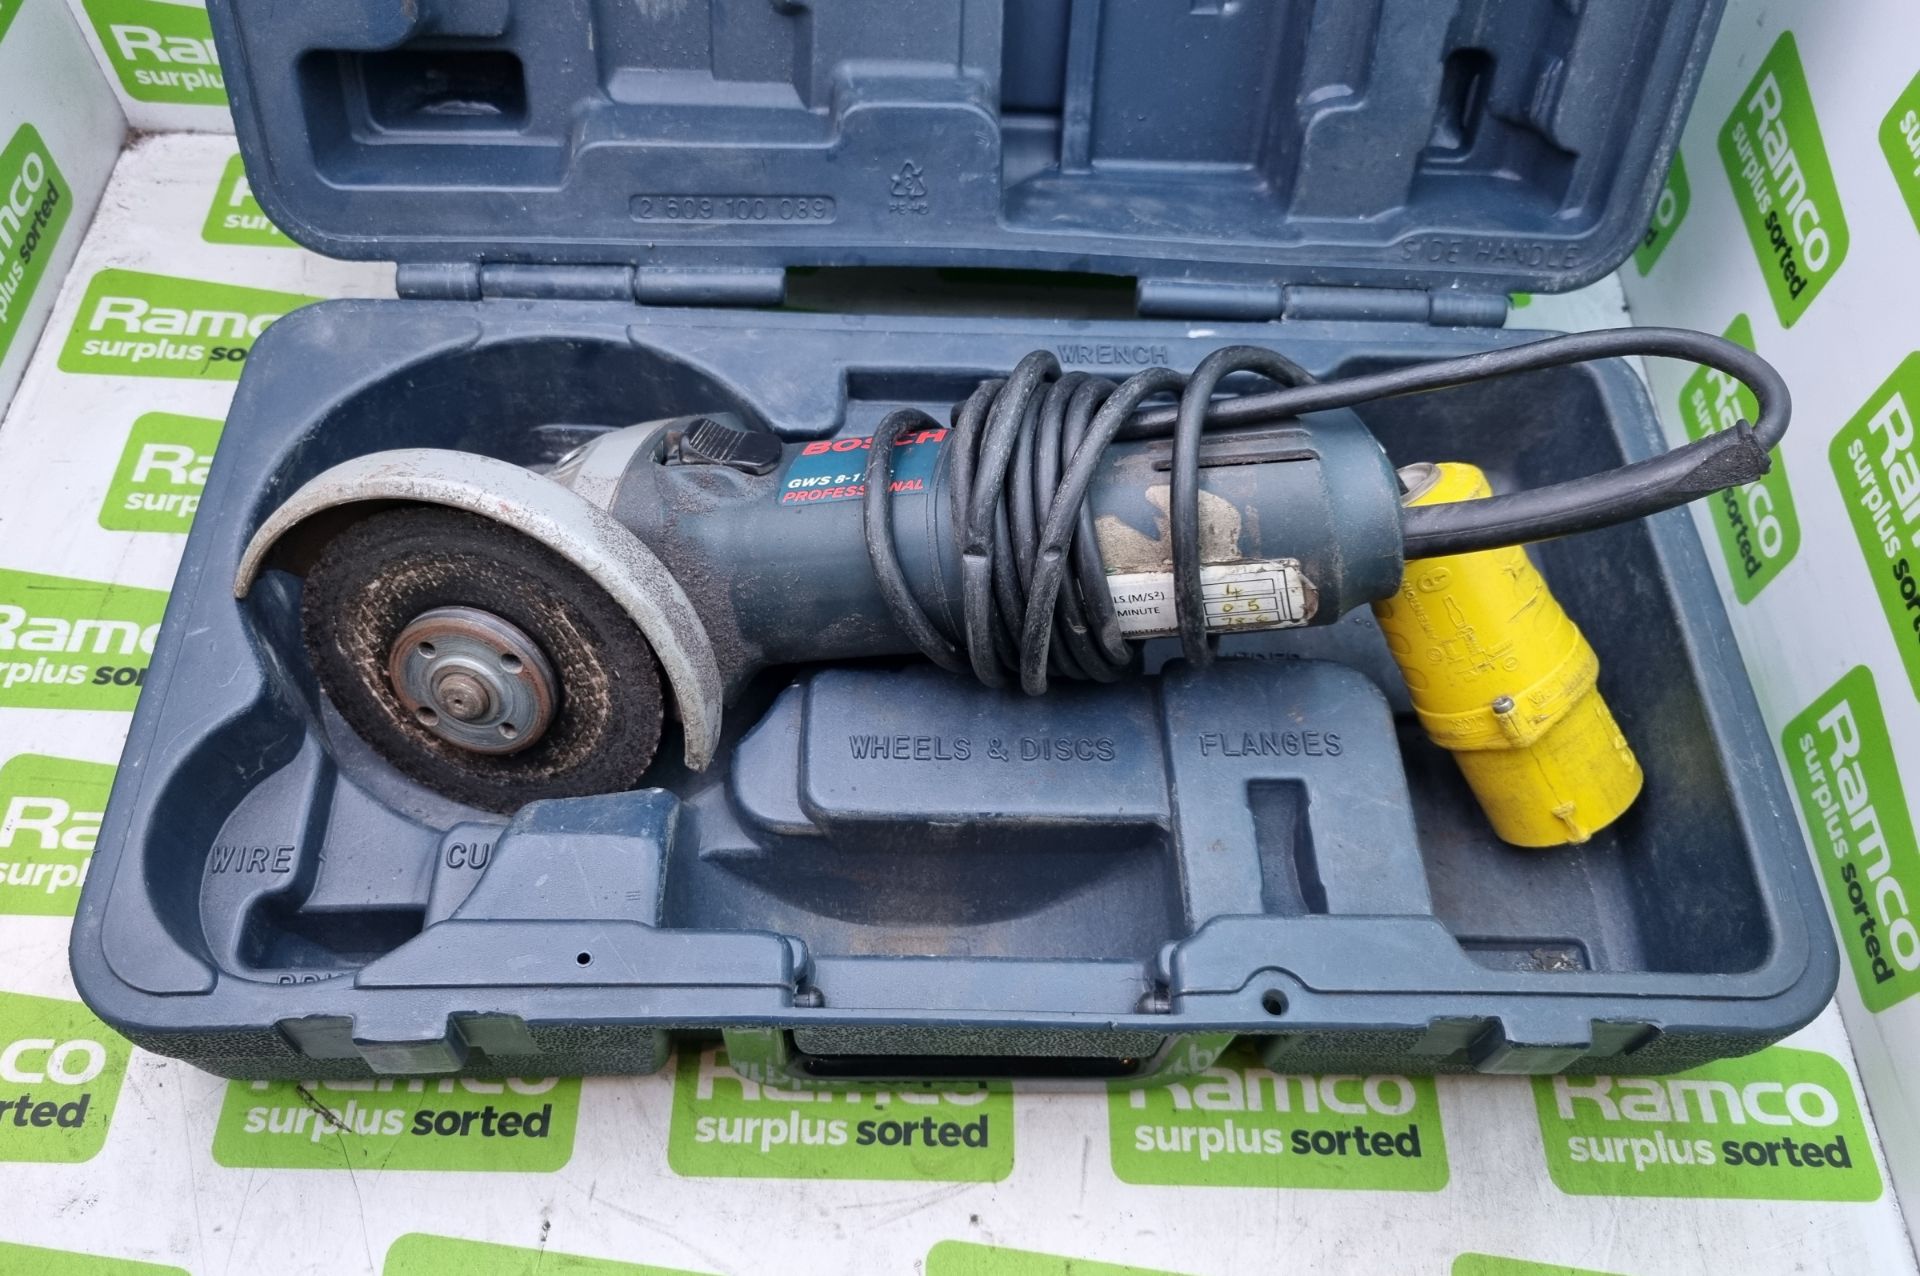 Bosch GWS 8-115C 110V angle grinder in hard plastic carry case - Image 3 of 4